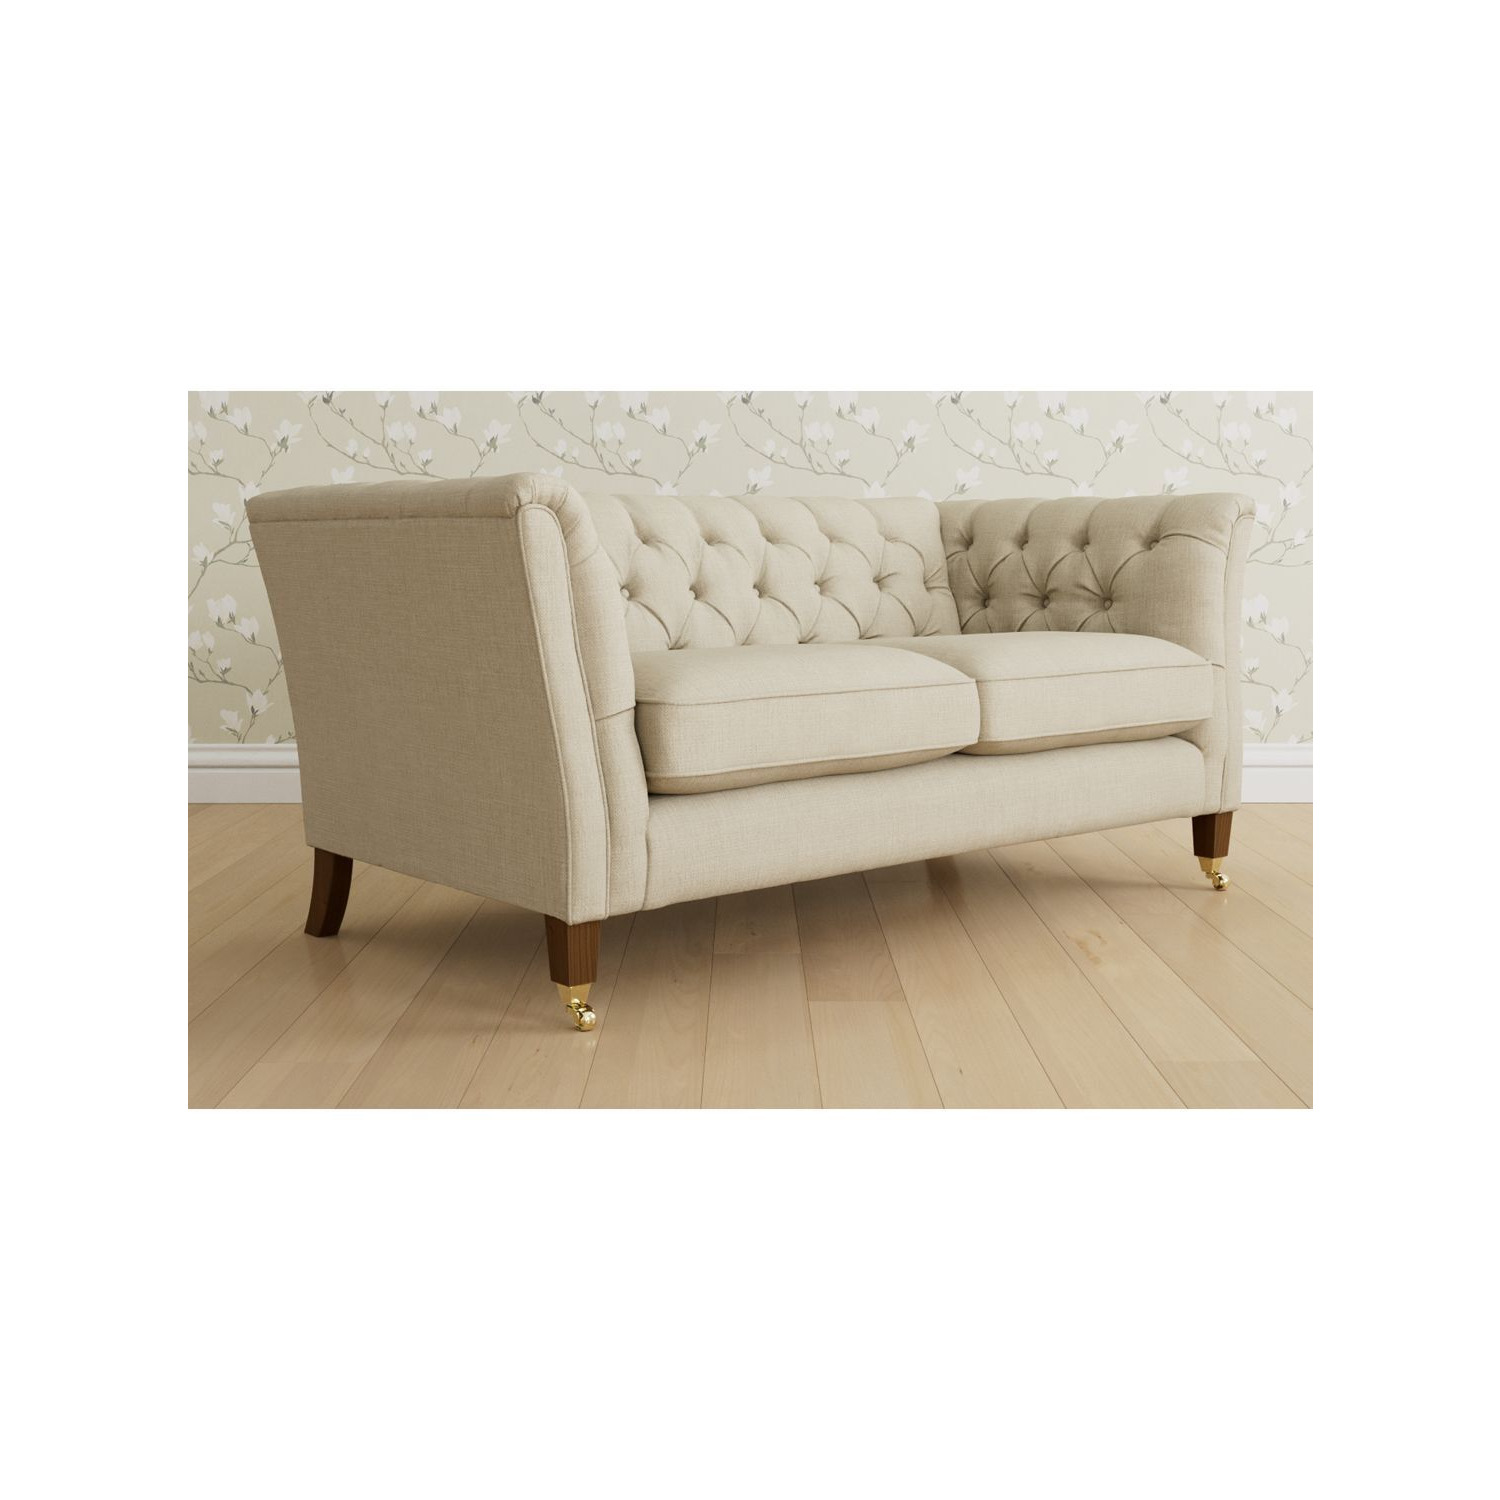 Laura Ashley Chatsworth Medium 2 Seater Sofa, Teak Leg - image 1